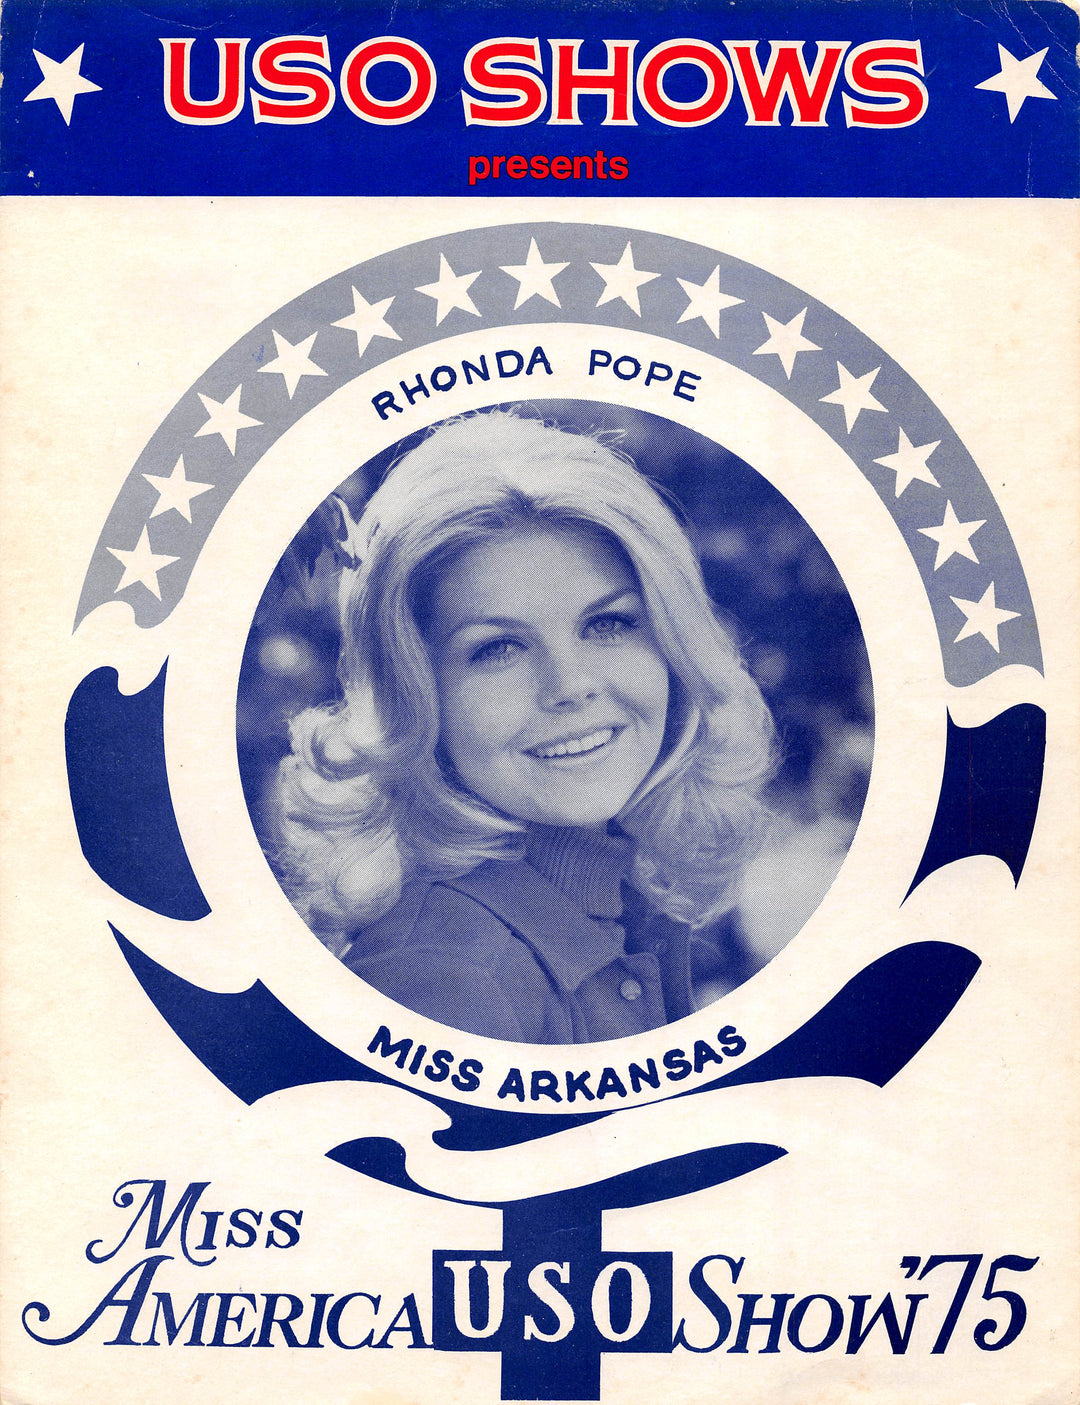 Miss Arkansas Rhonda Pope Miss America USO Shows Vintage Poster Flyer 1975